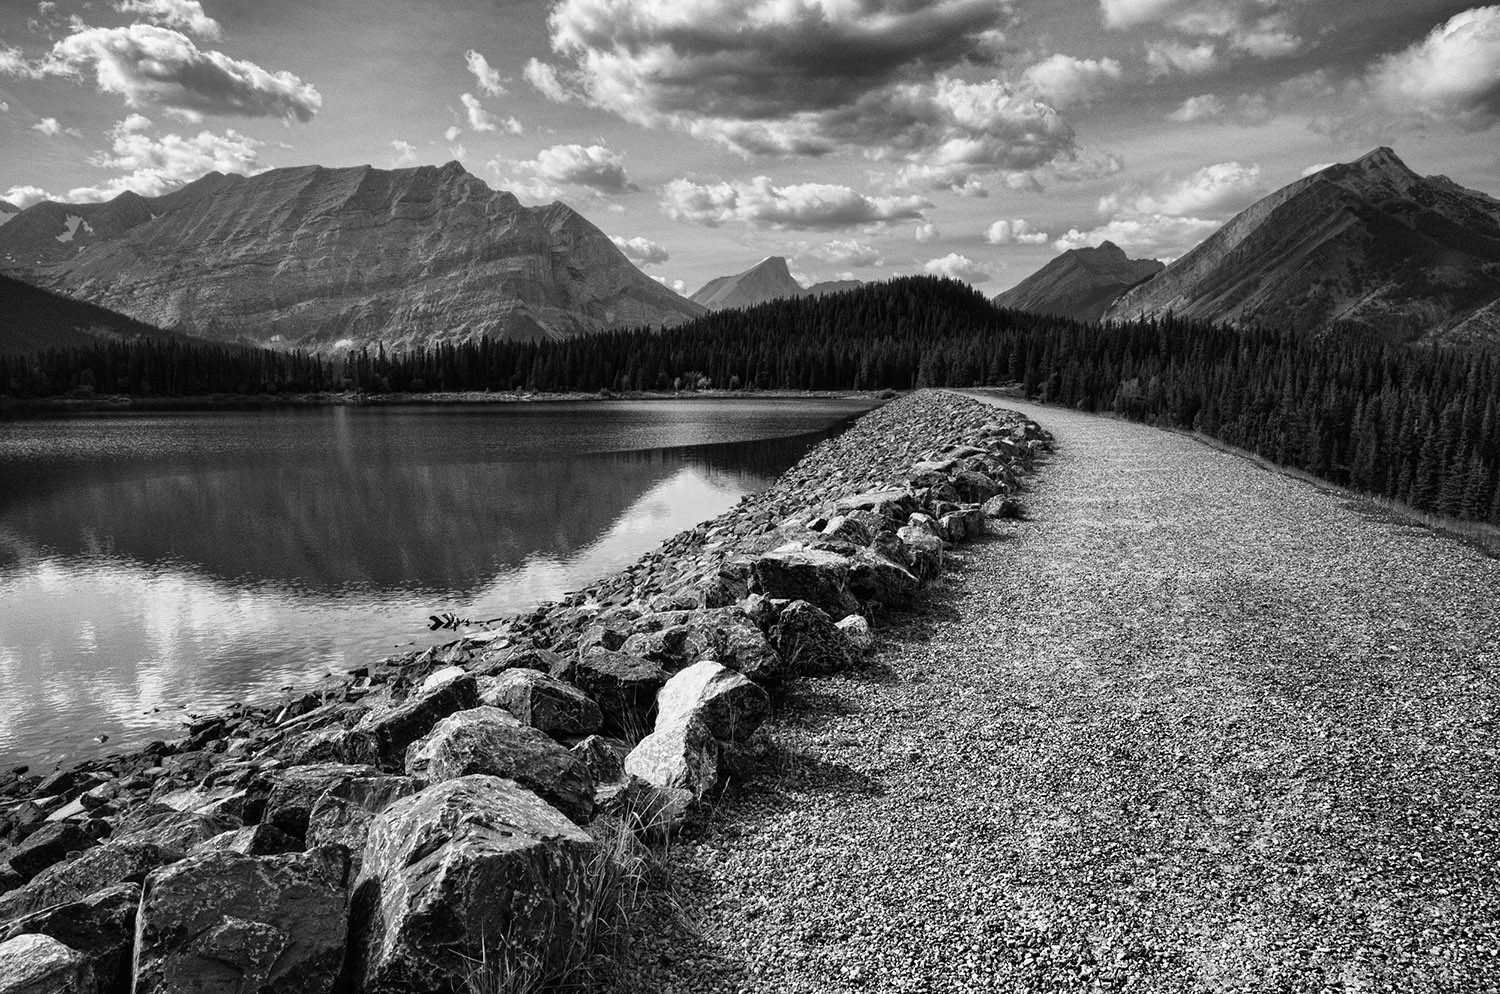 The Rockies in Black & White